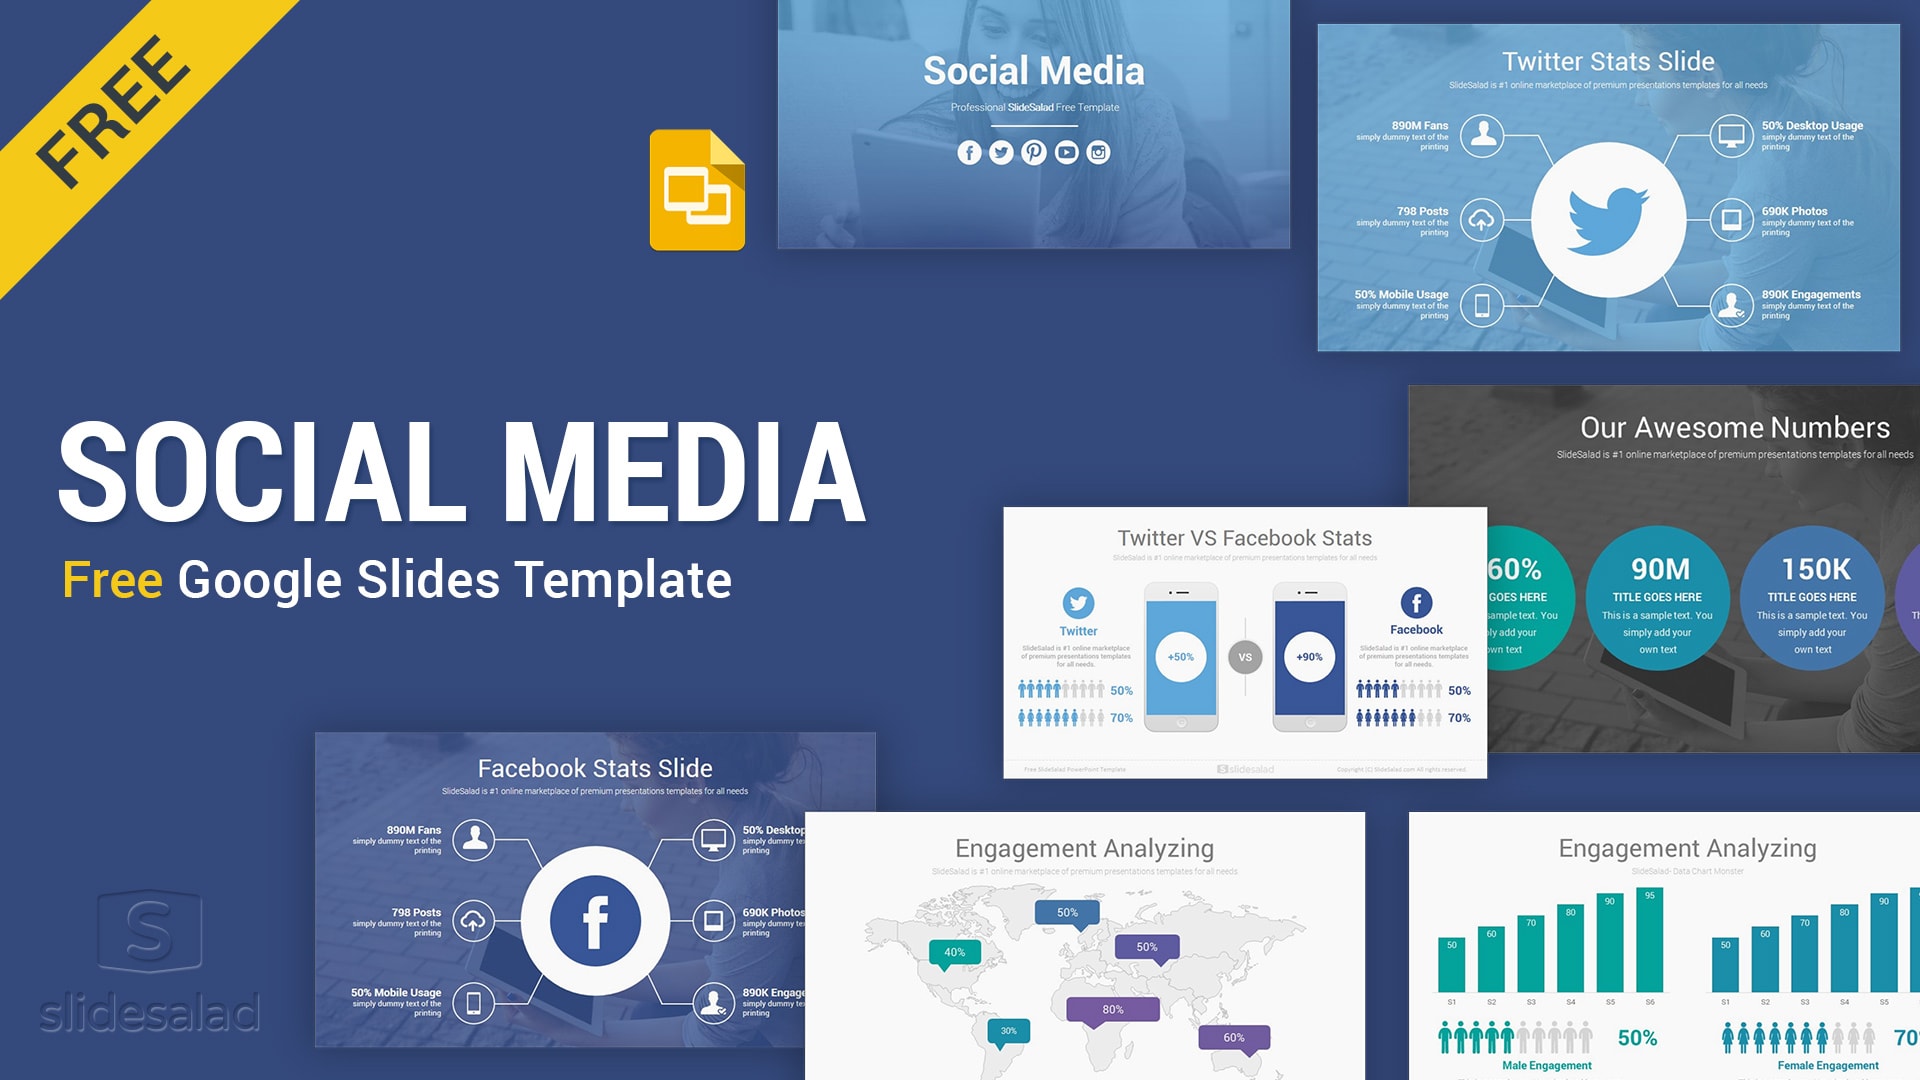 Social Media Free Google Slides Template Themes - SlideSalad